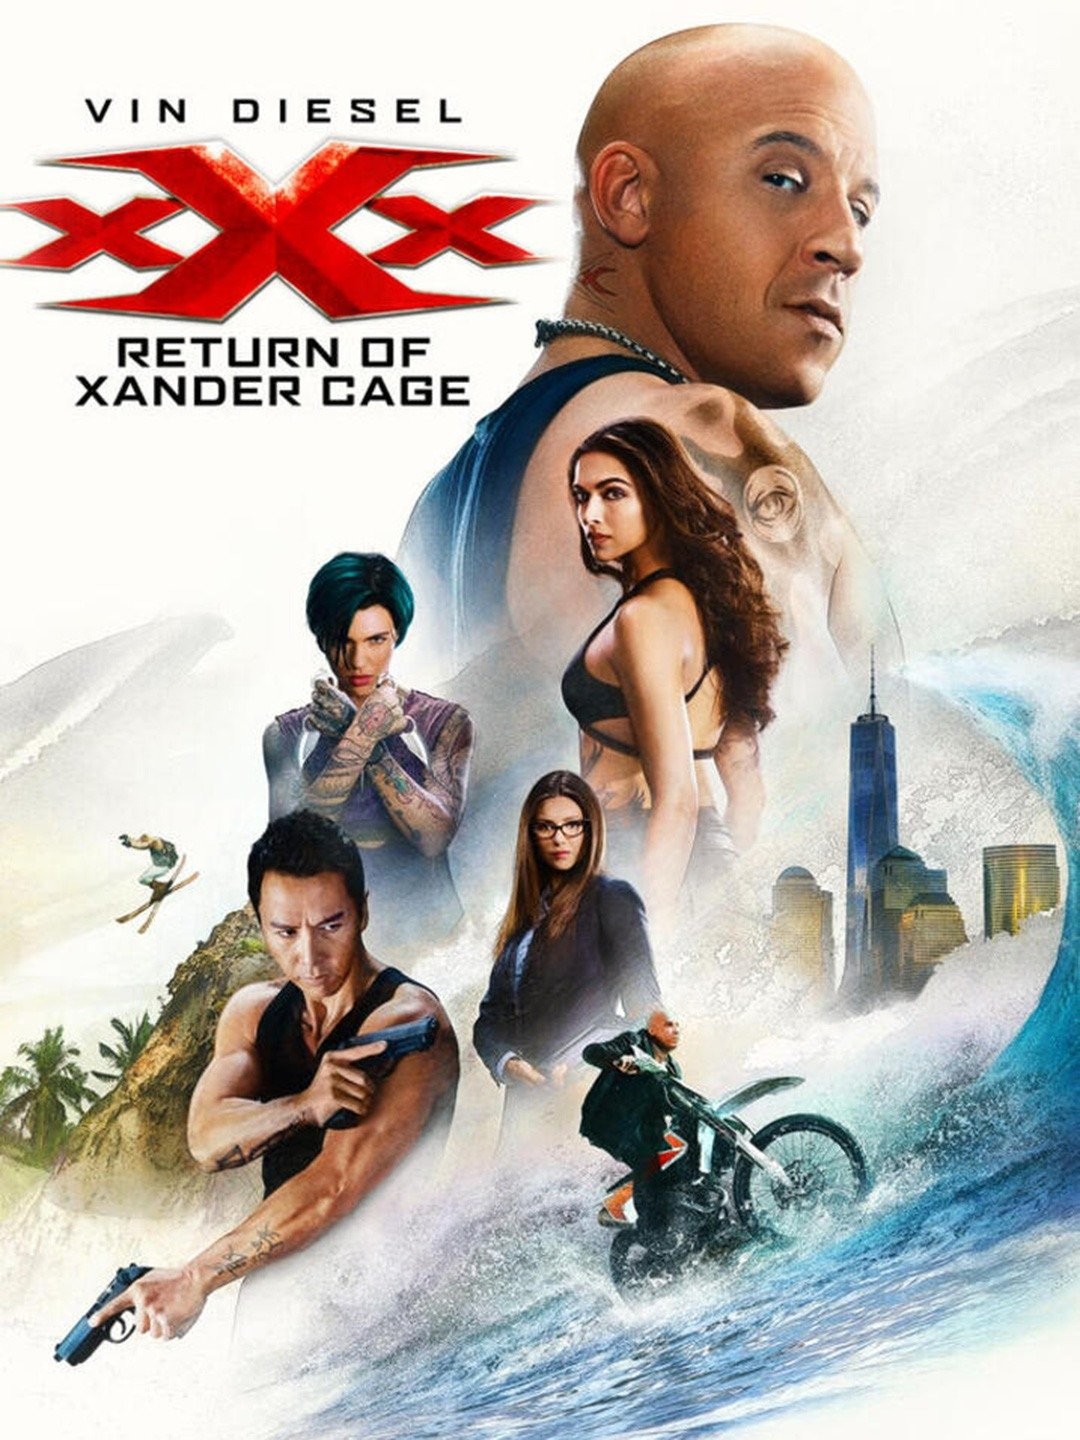 Xxxhotvideo Com - xXx: Return of Xander Cage | Rotten Tomatoes